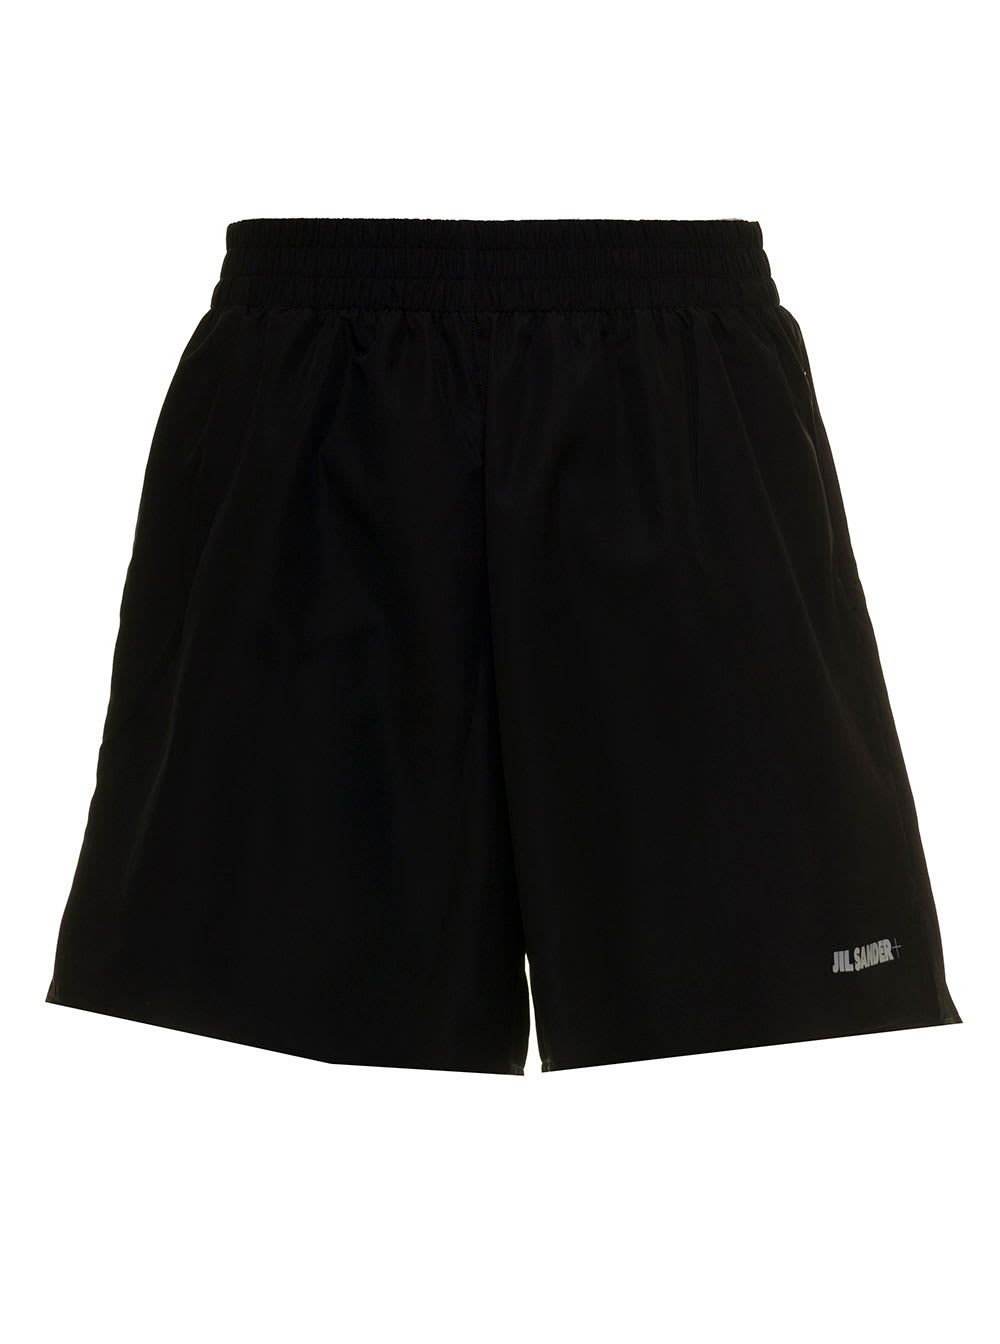 Jil Sander Mans Black Jersey Shorts With Logo